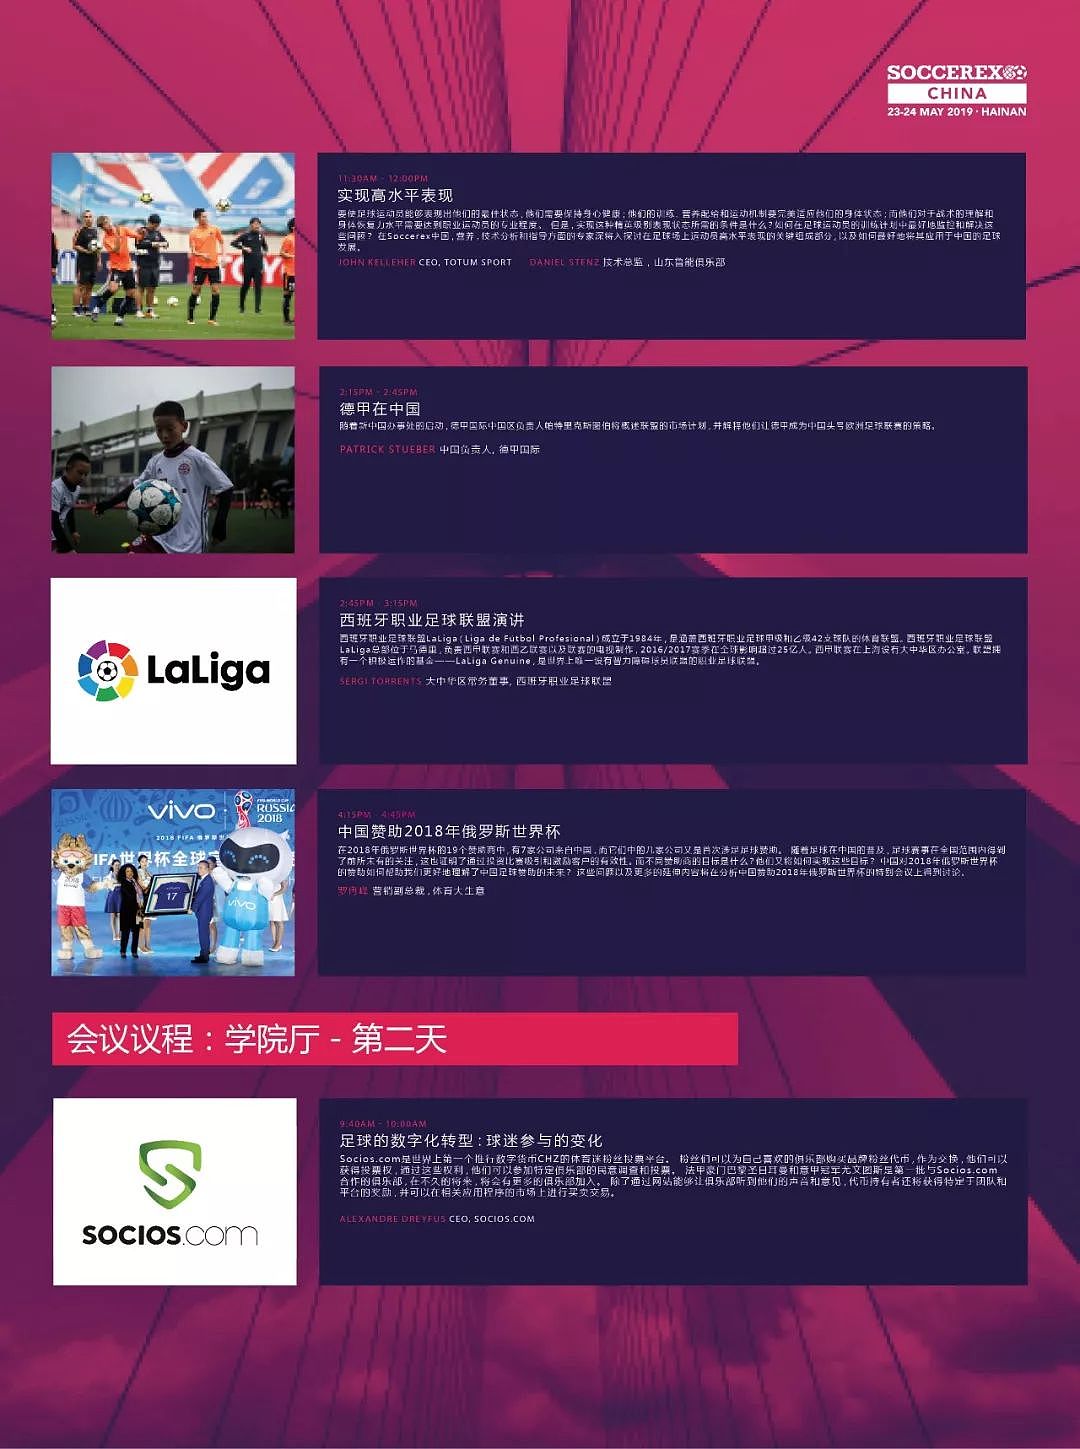 Soccerex公布中国全球足球产业峰会最终阵容 - 5